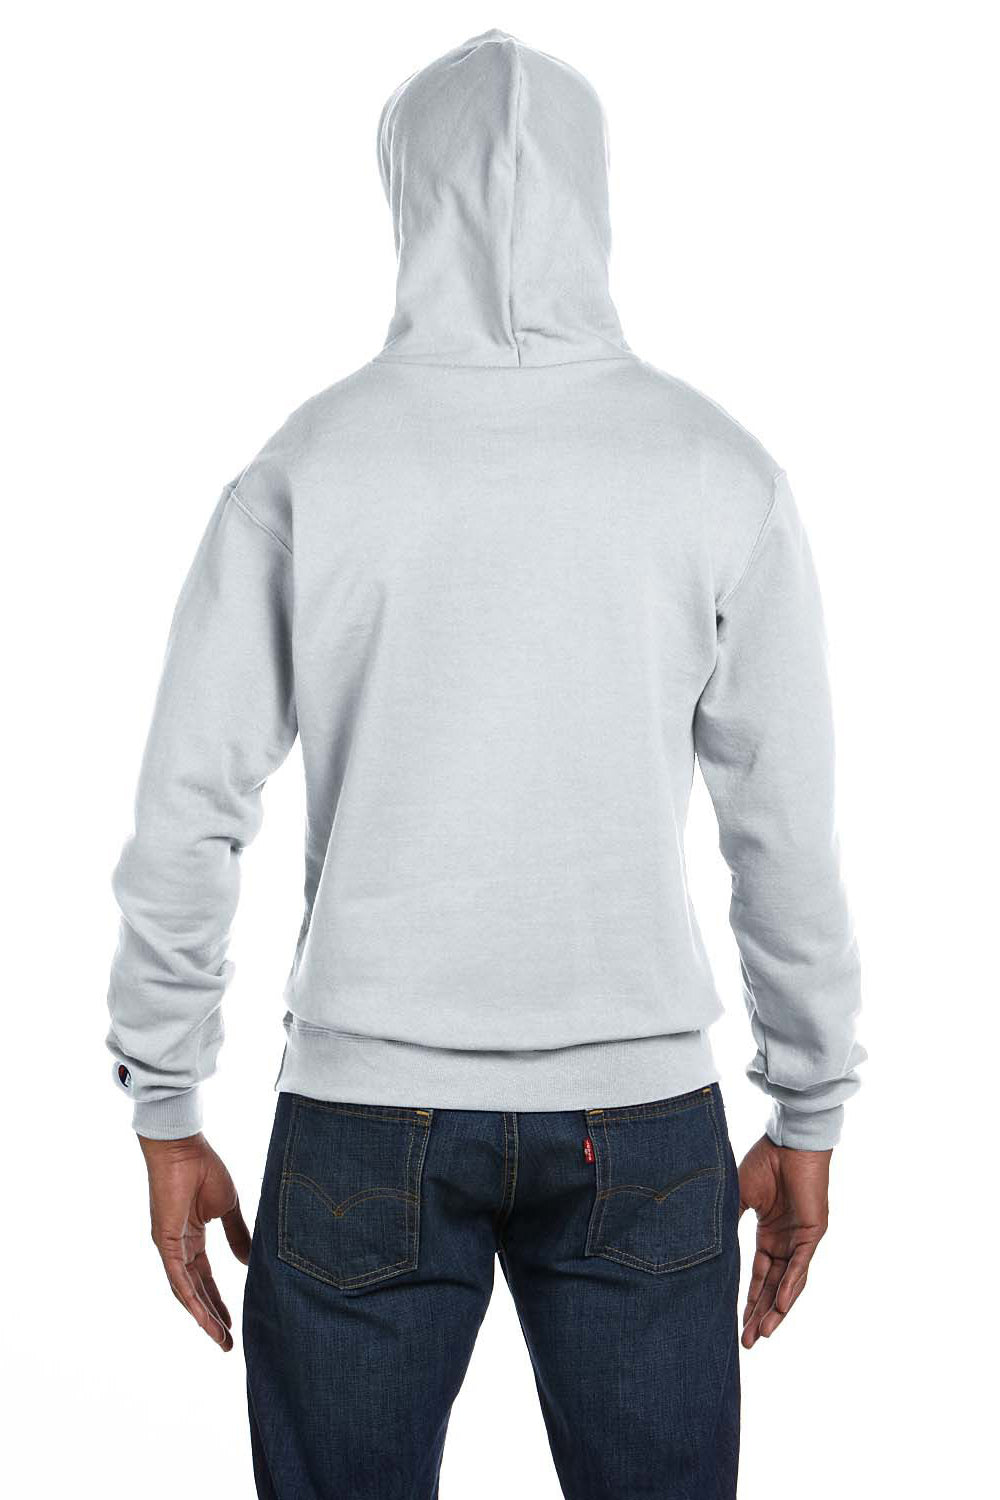 Double Silver — Moisture Hooded Wicking Fleece Dry Champion Eco S700 Sweatshirt Grey Mens Hoodie